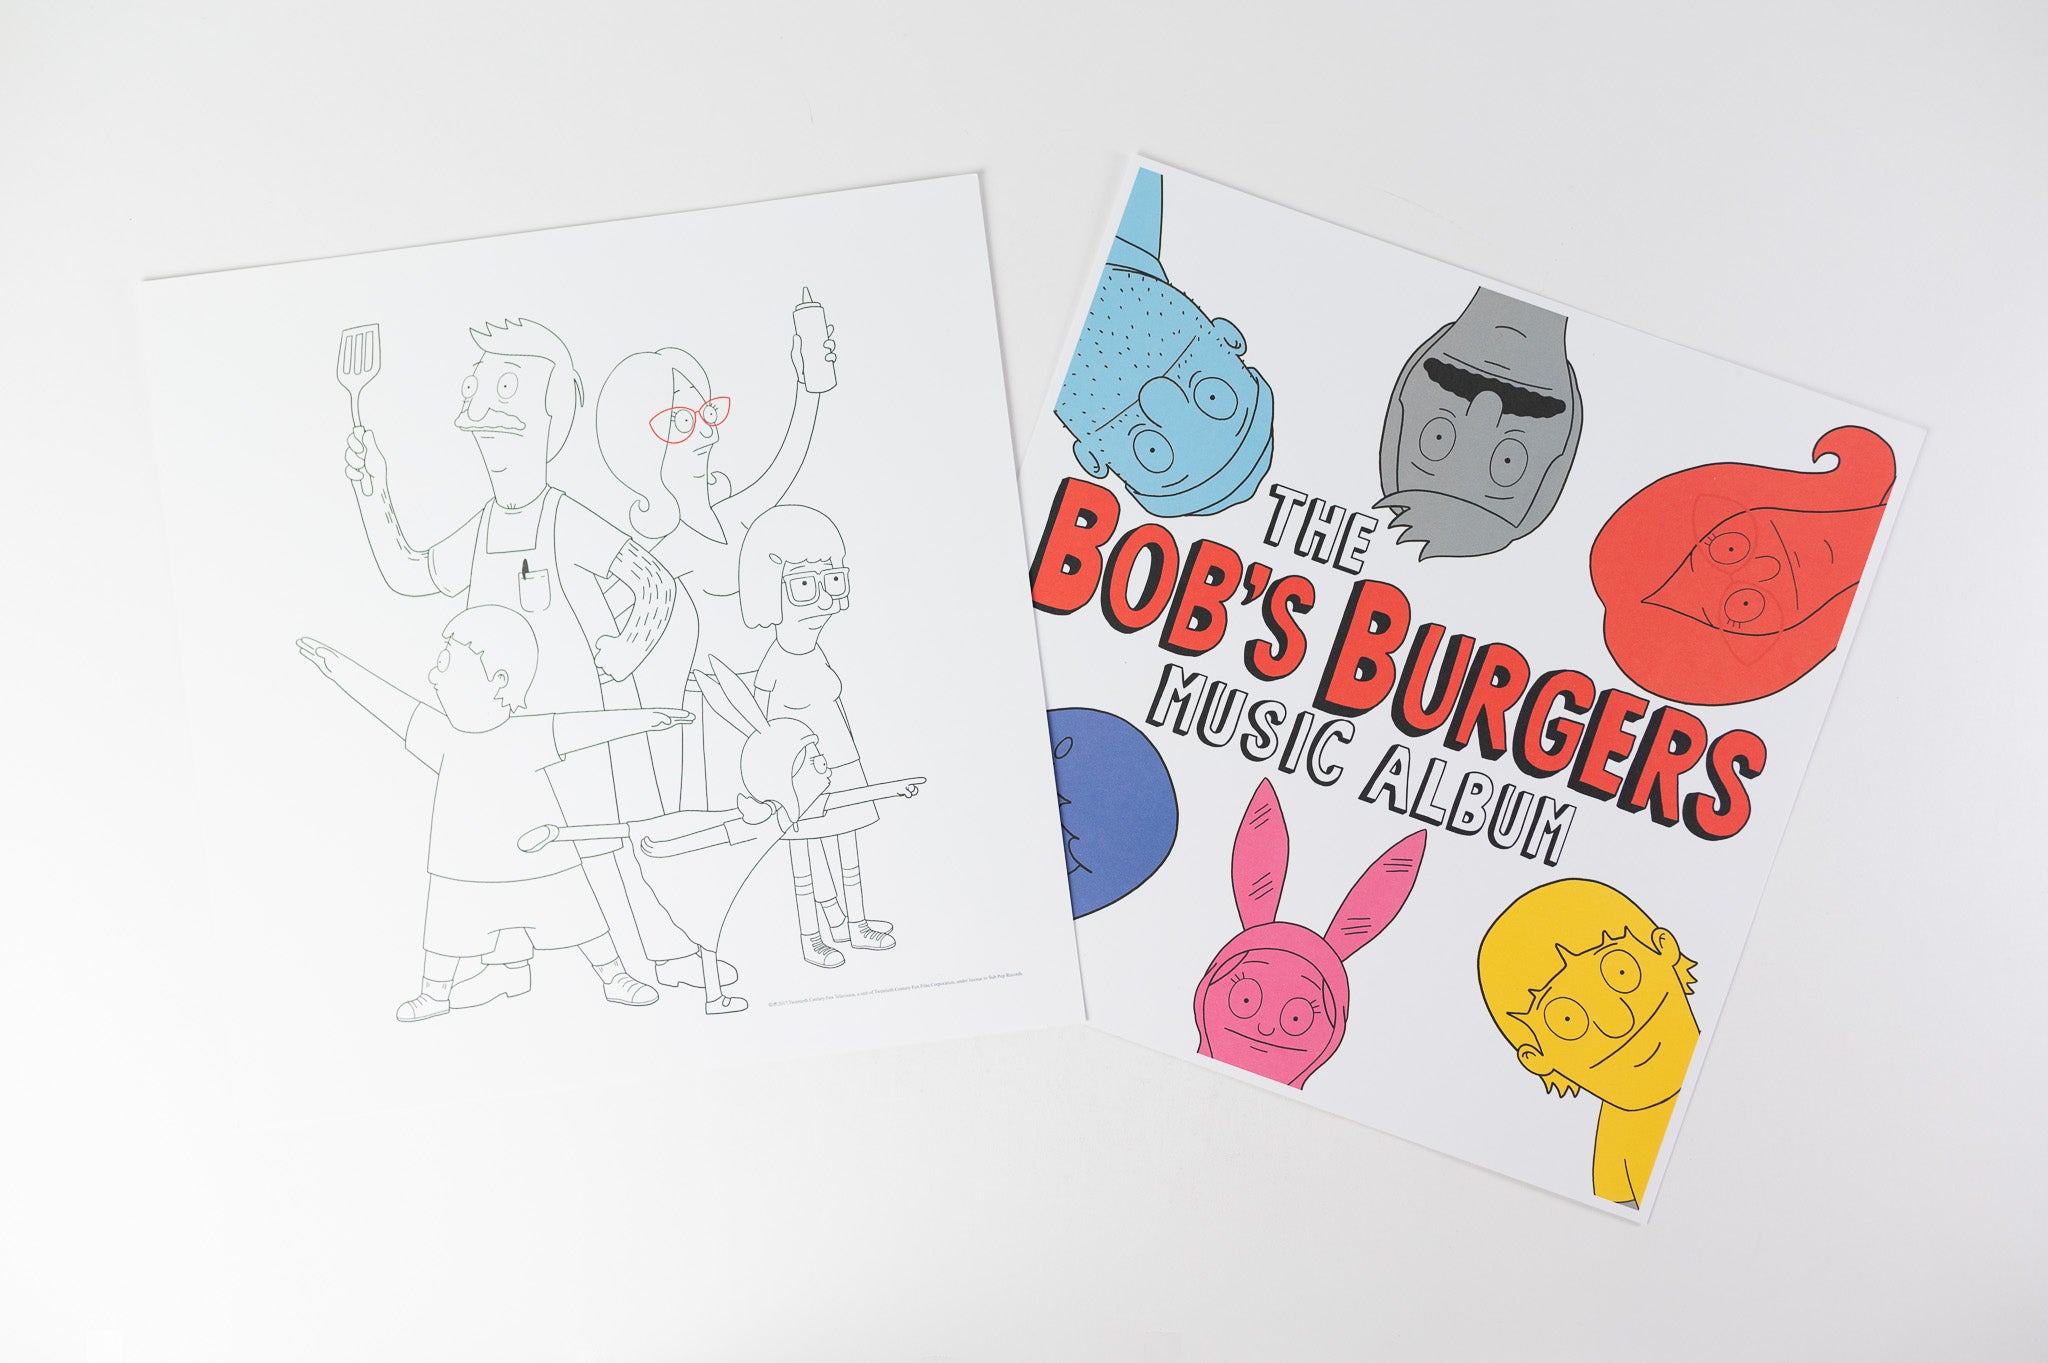 Bob's Burgers - The Bob's Burgers Music Album on Sub Pop Deluxe Ltd Colored Vinyl Box Set